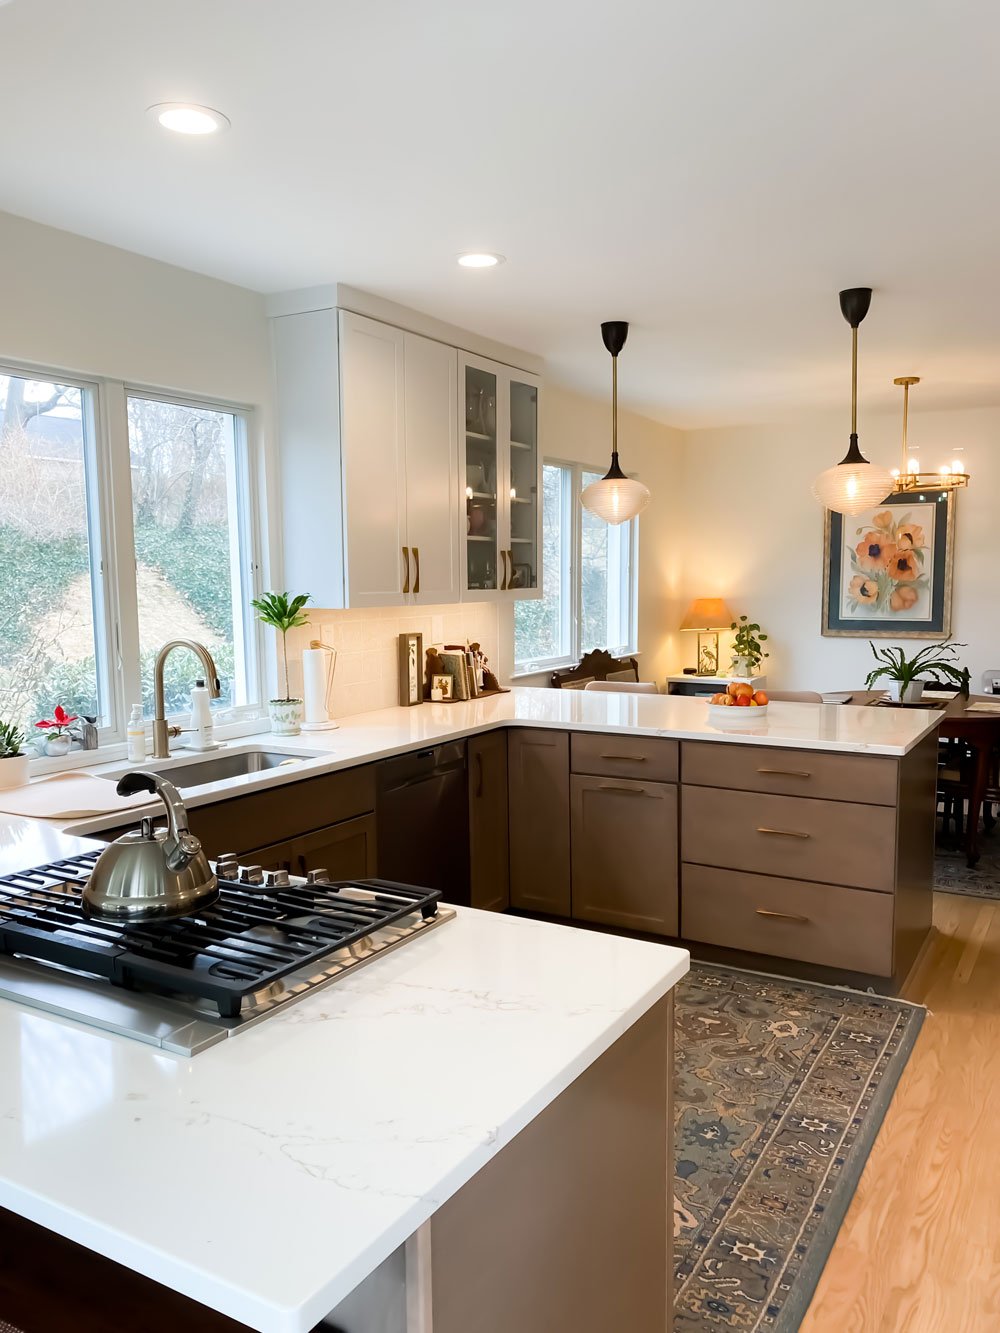 U-shaped kitchen countertops with sliding kitchen window